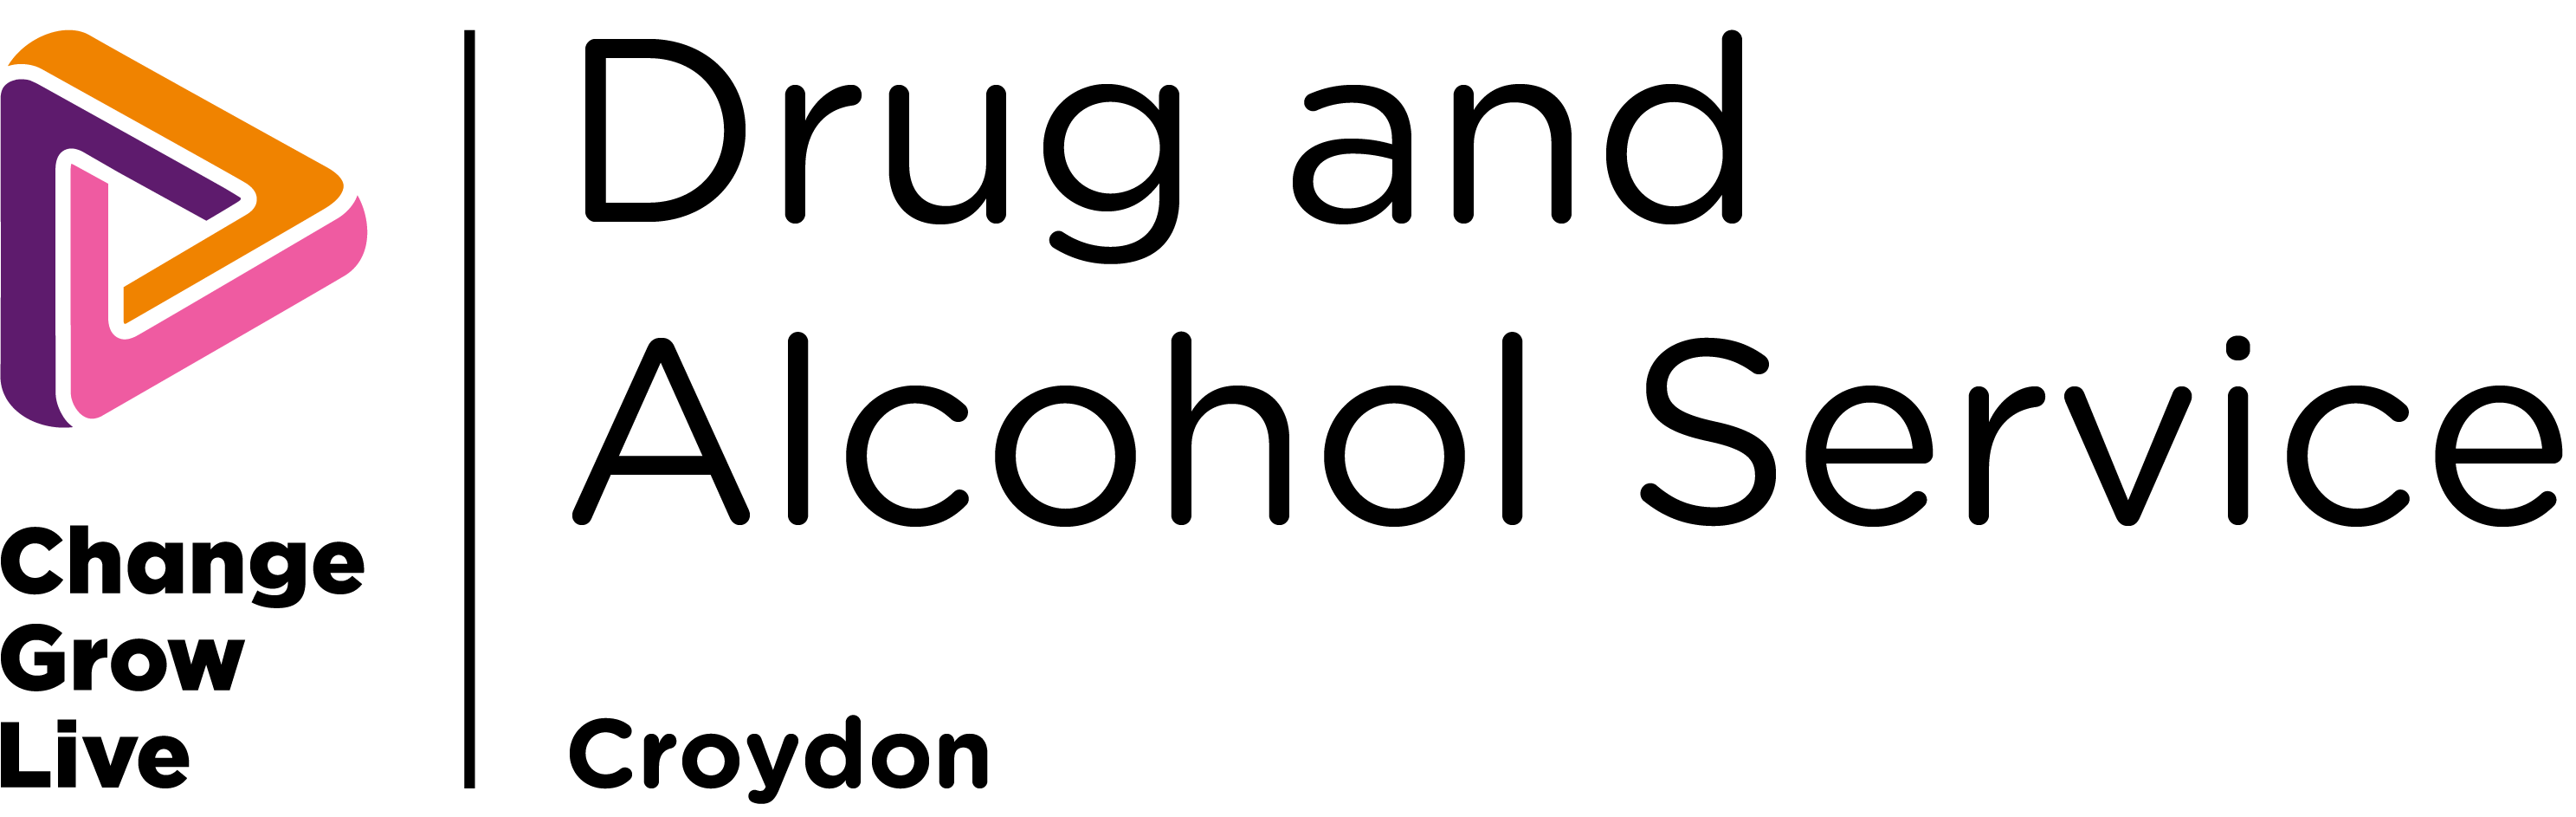 The Drug and Alcohol Service - Croydon logo